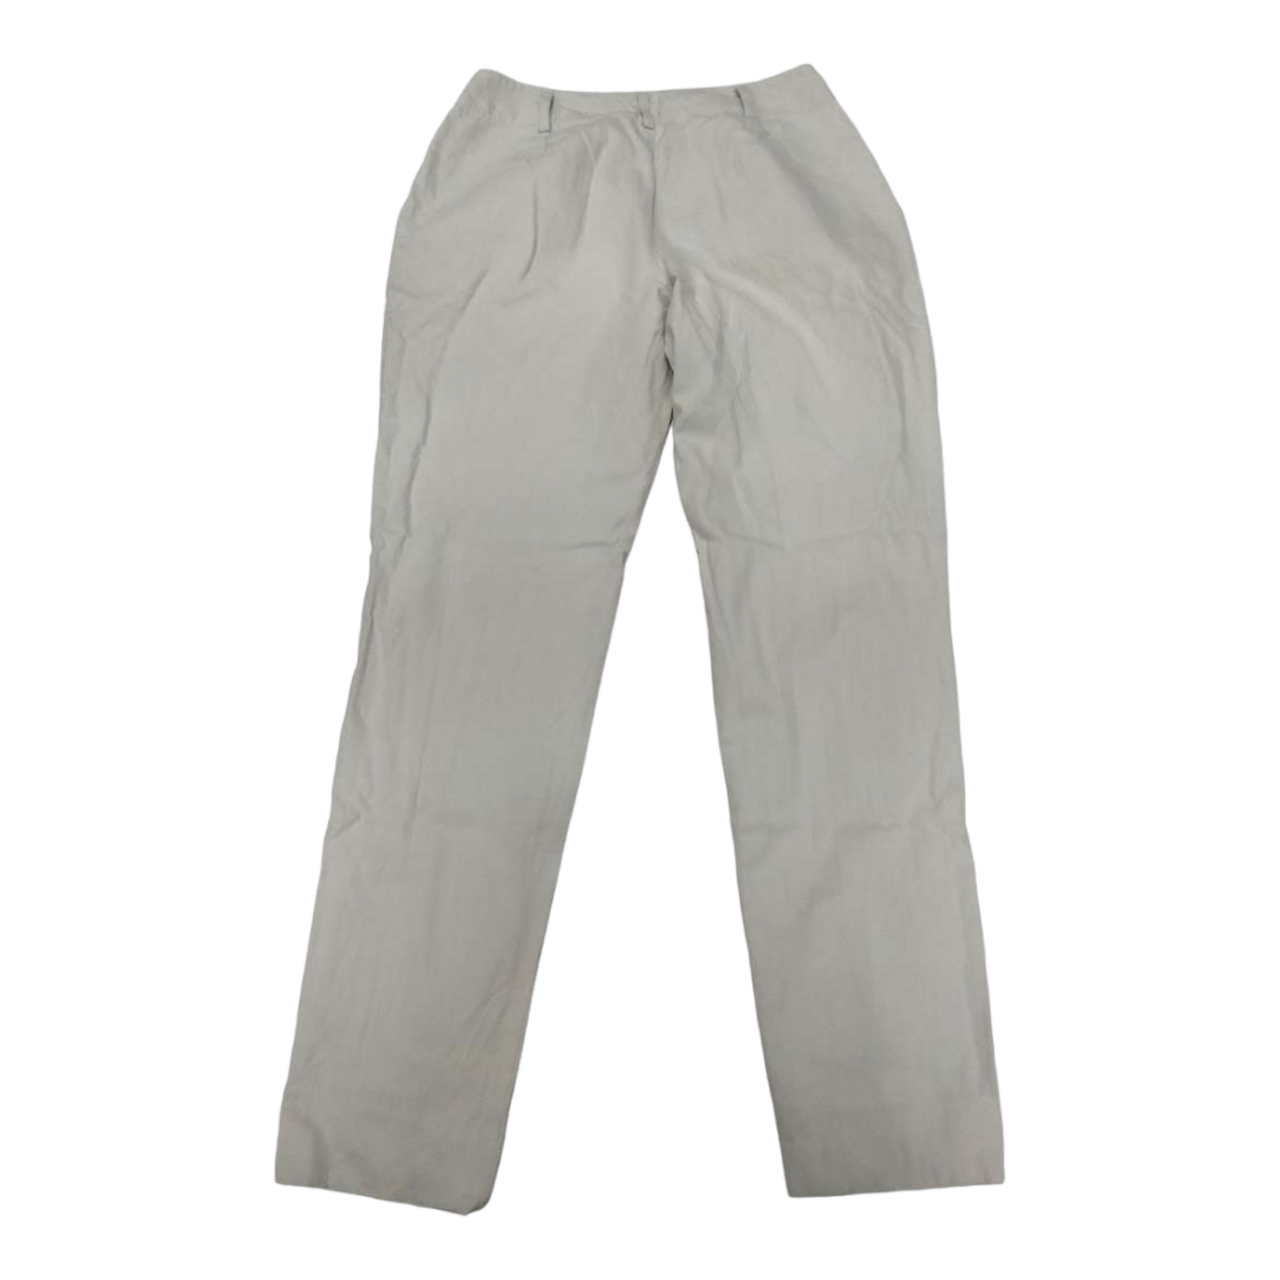 Lacoste Light Grey Long Pants